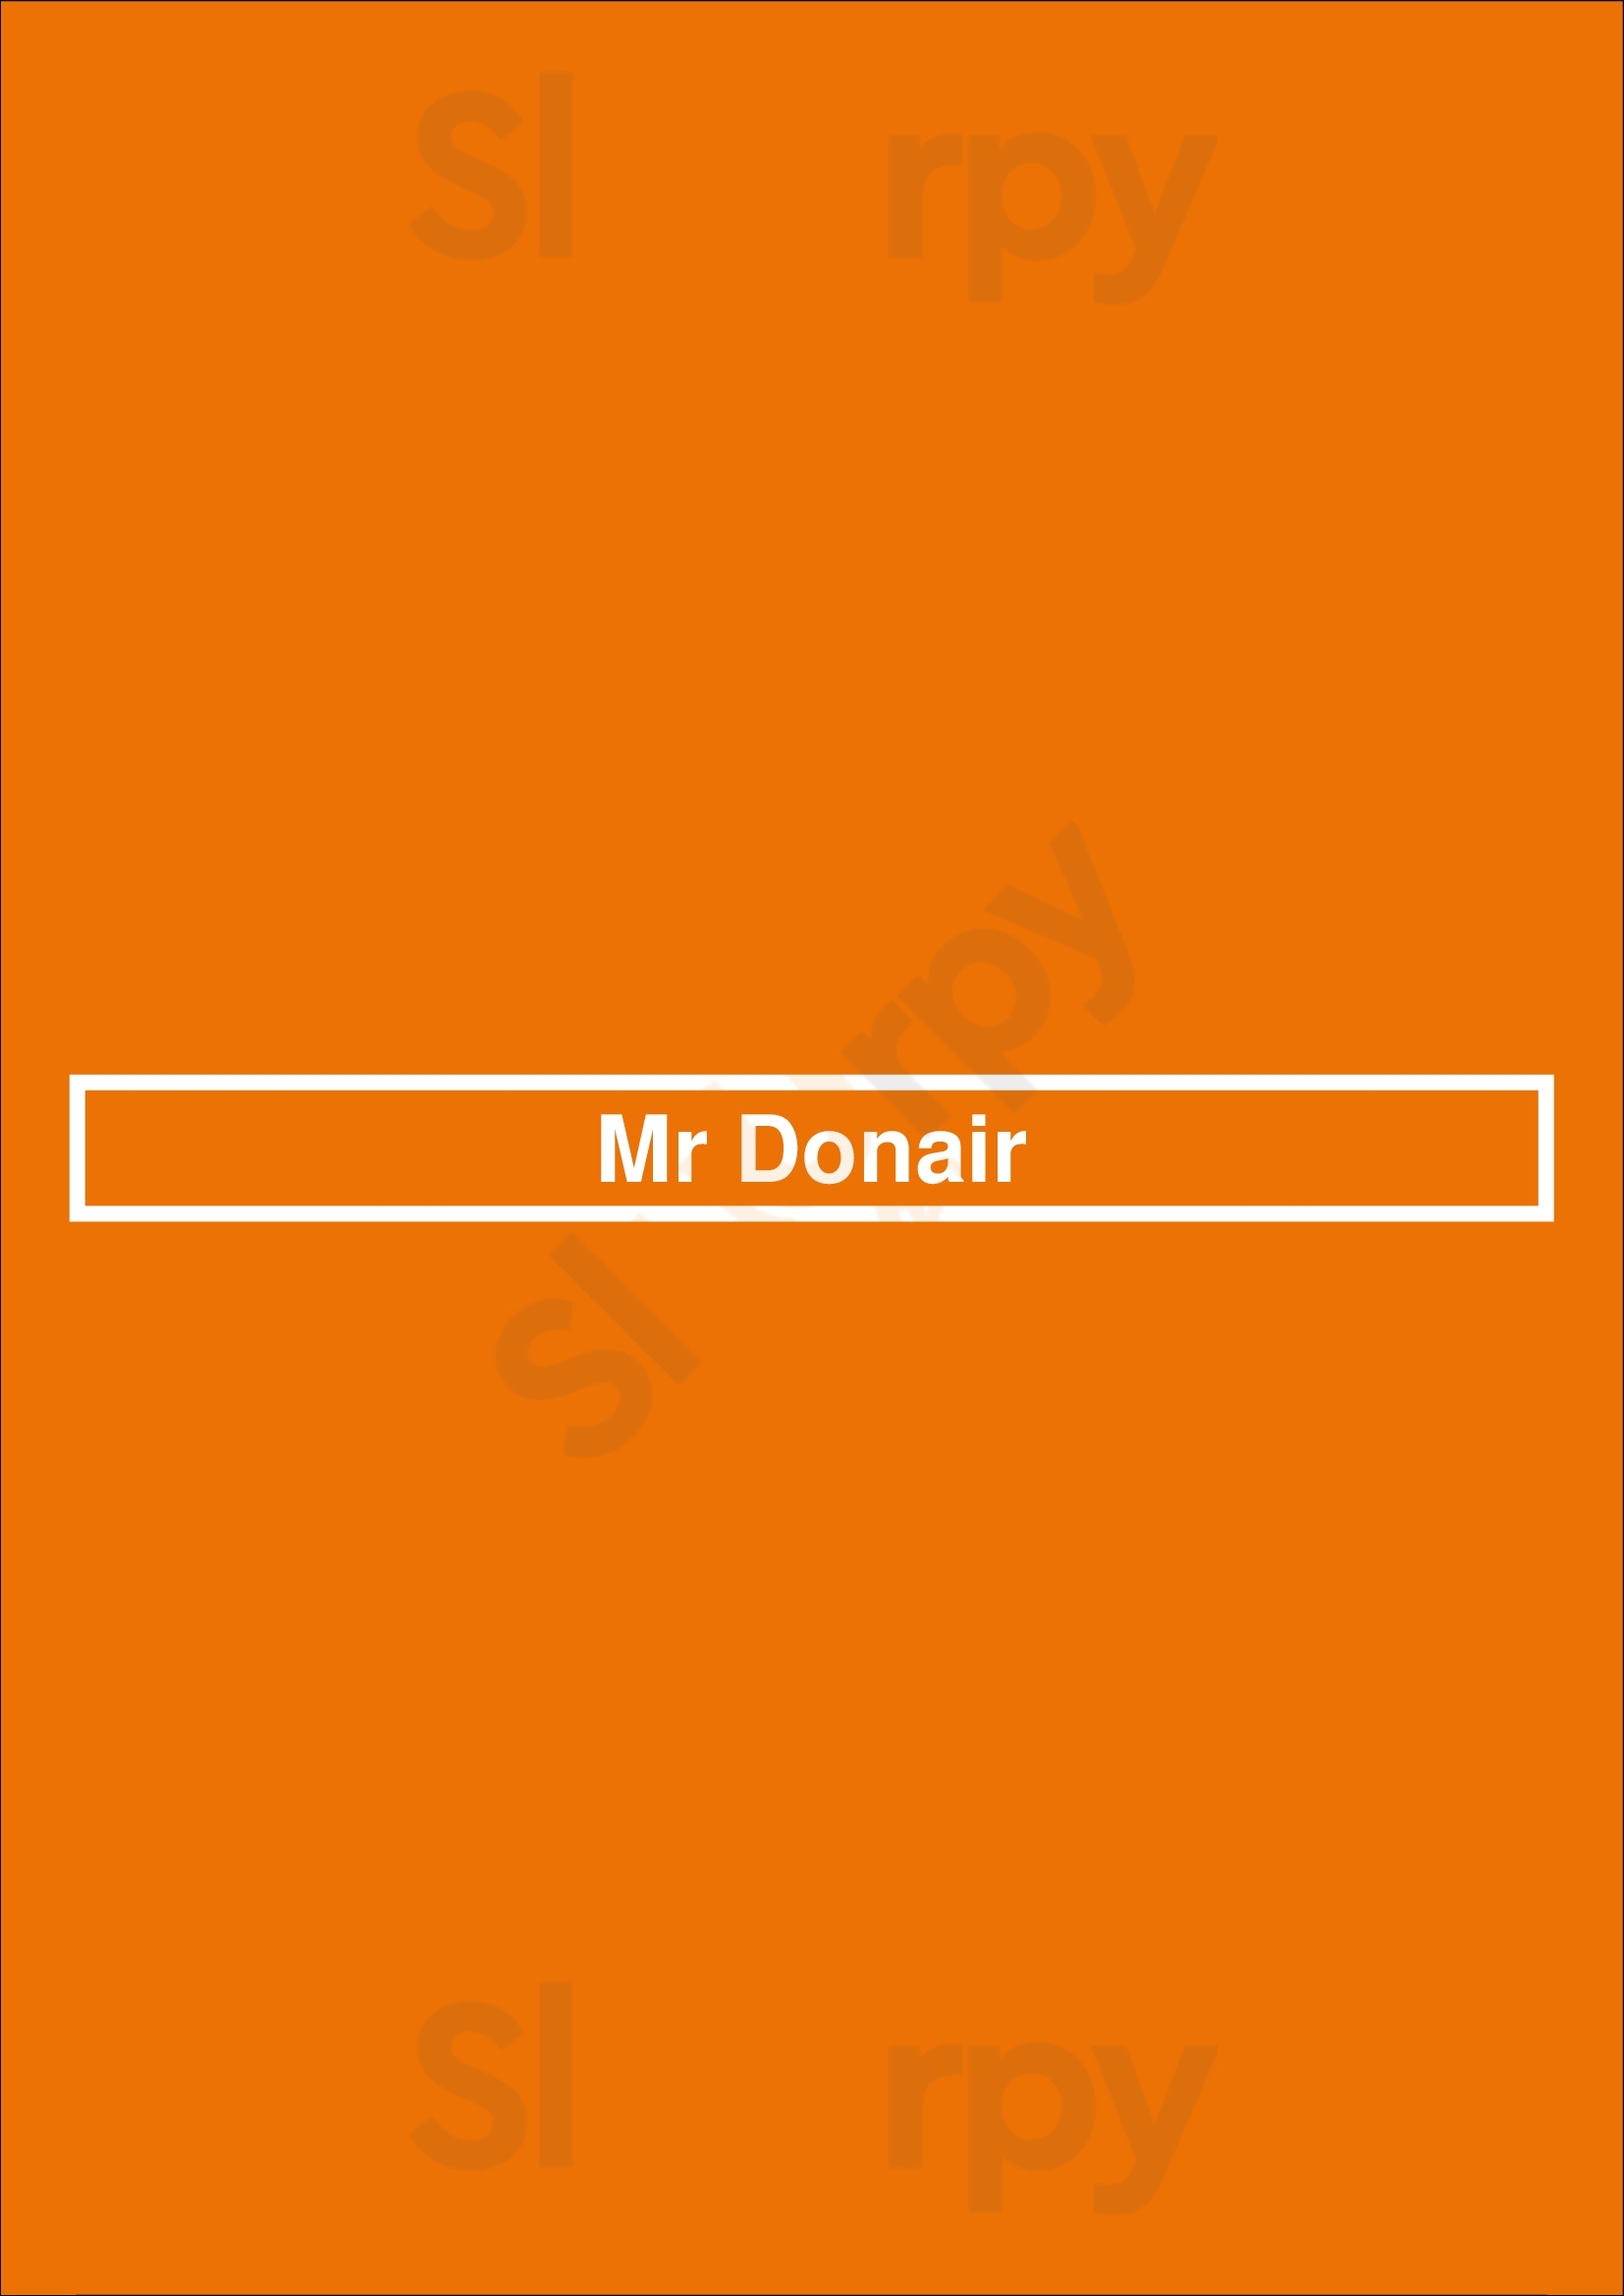 Mr Donair Kingston Menu - 1